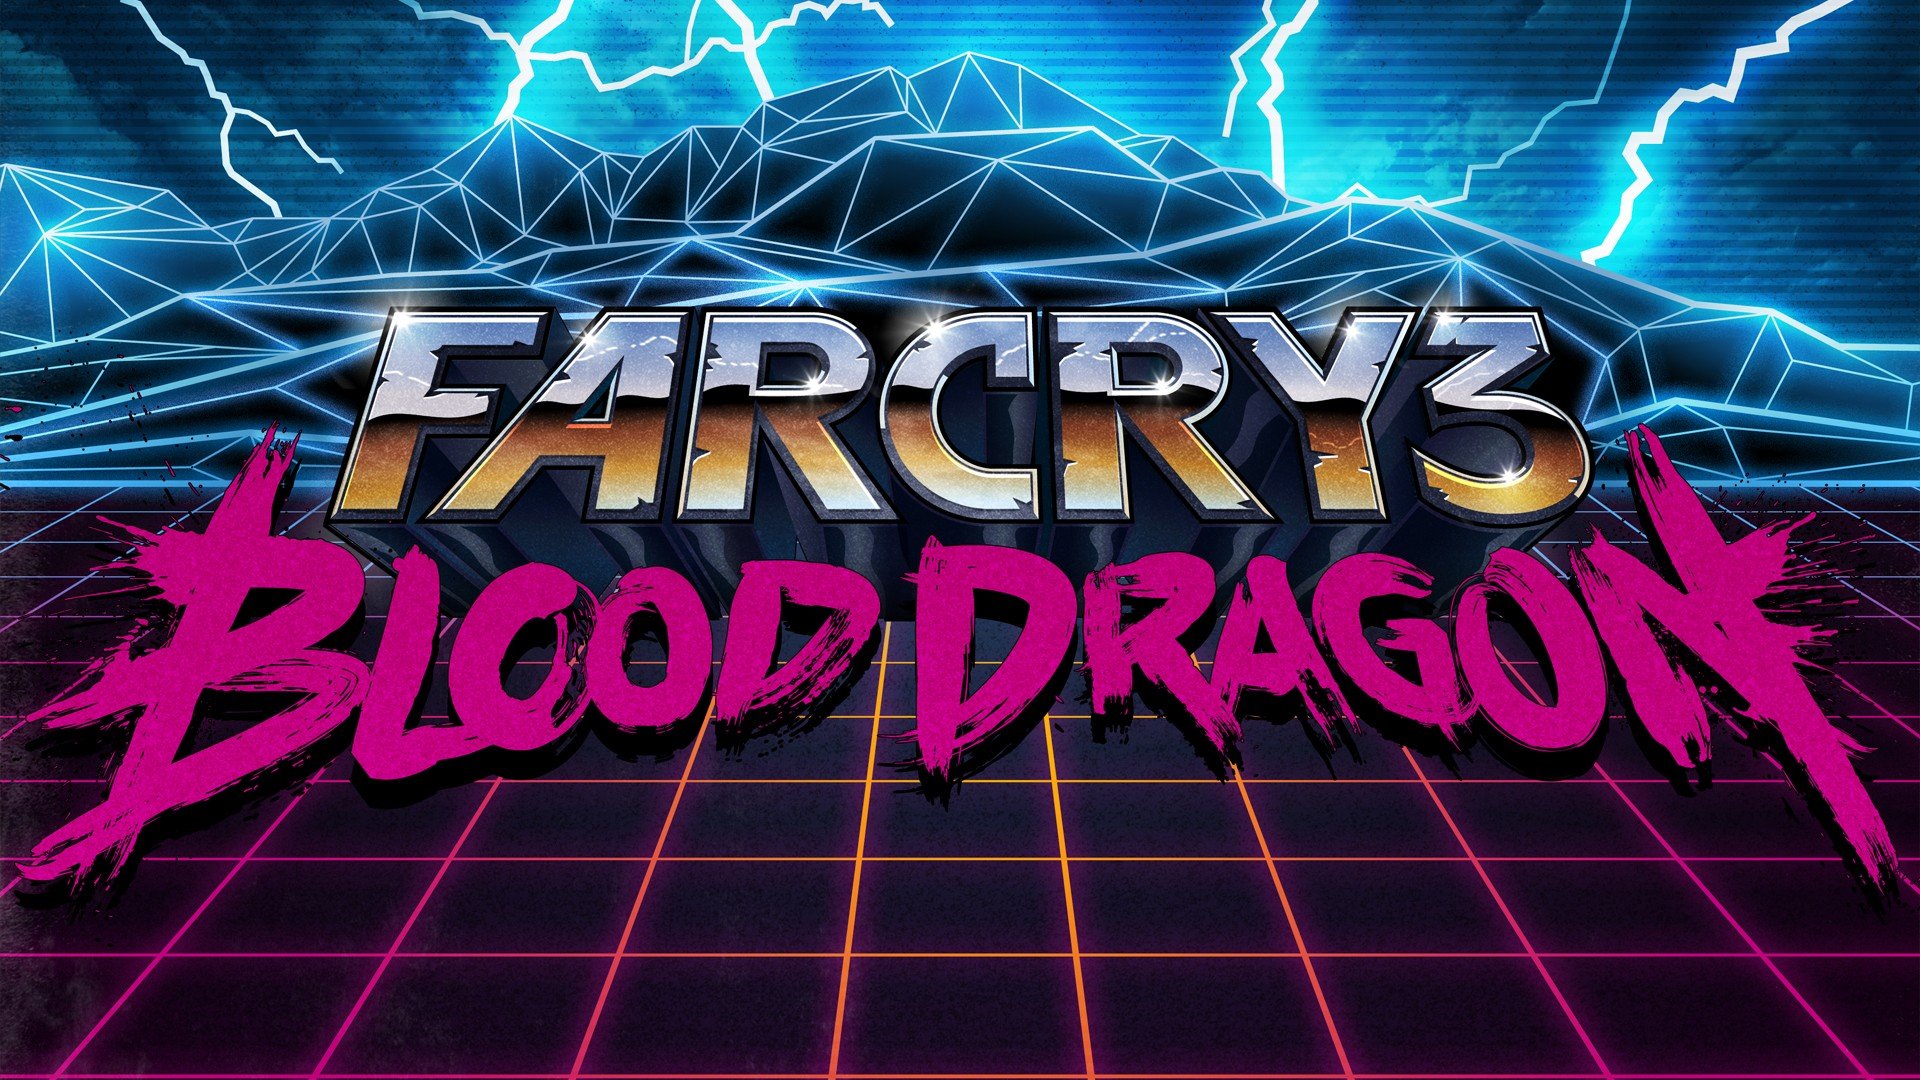 Best Far Cry 3: Blood Dragon wallpaper ID:68965 for High Resolution full hd 1920x1080 desktop